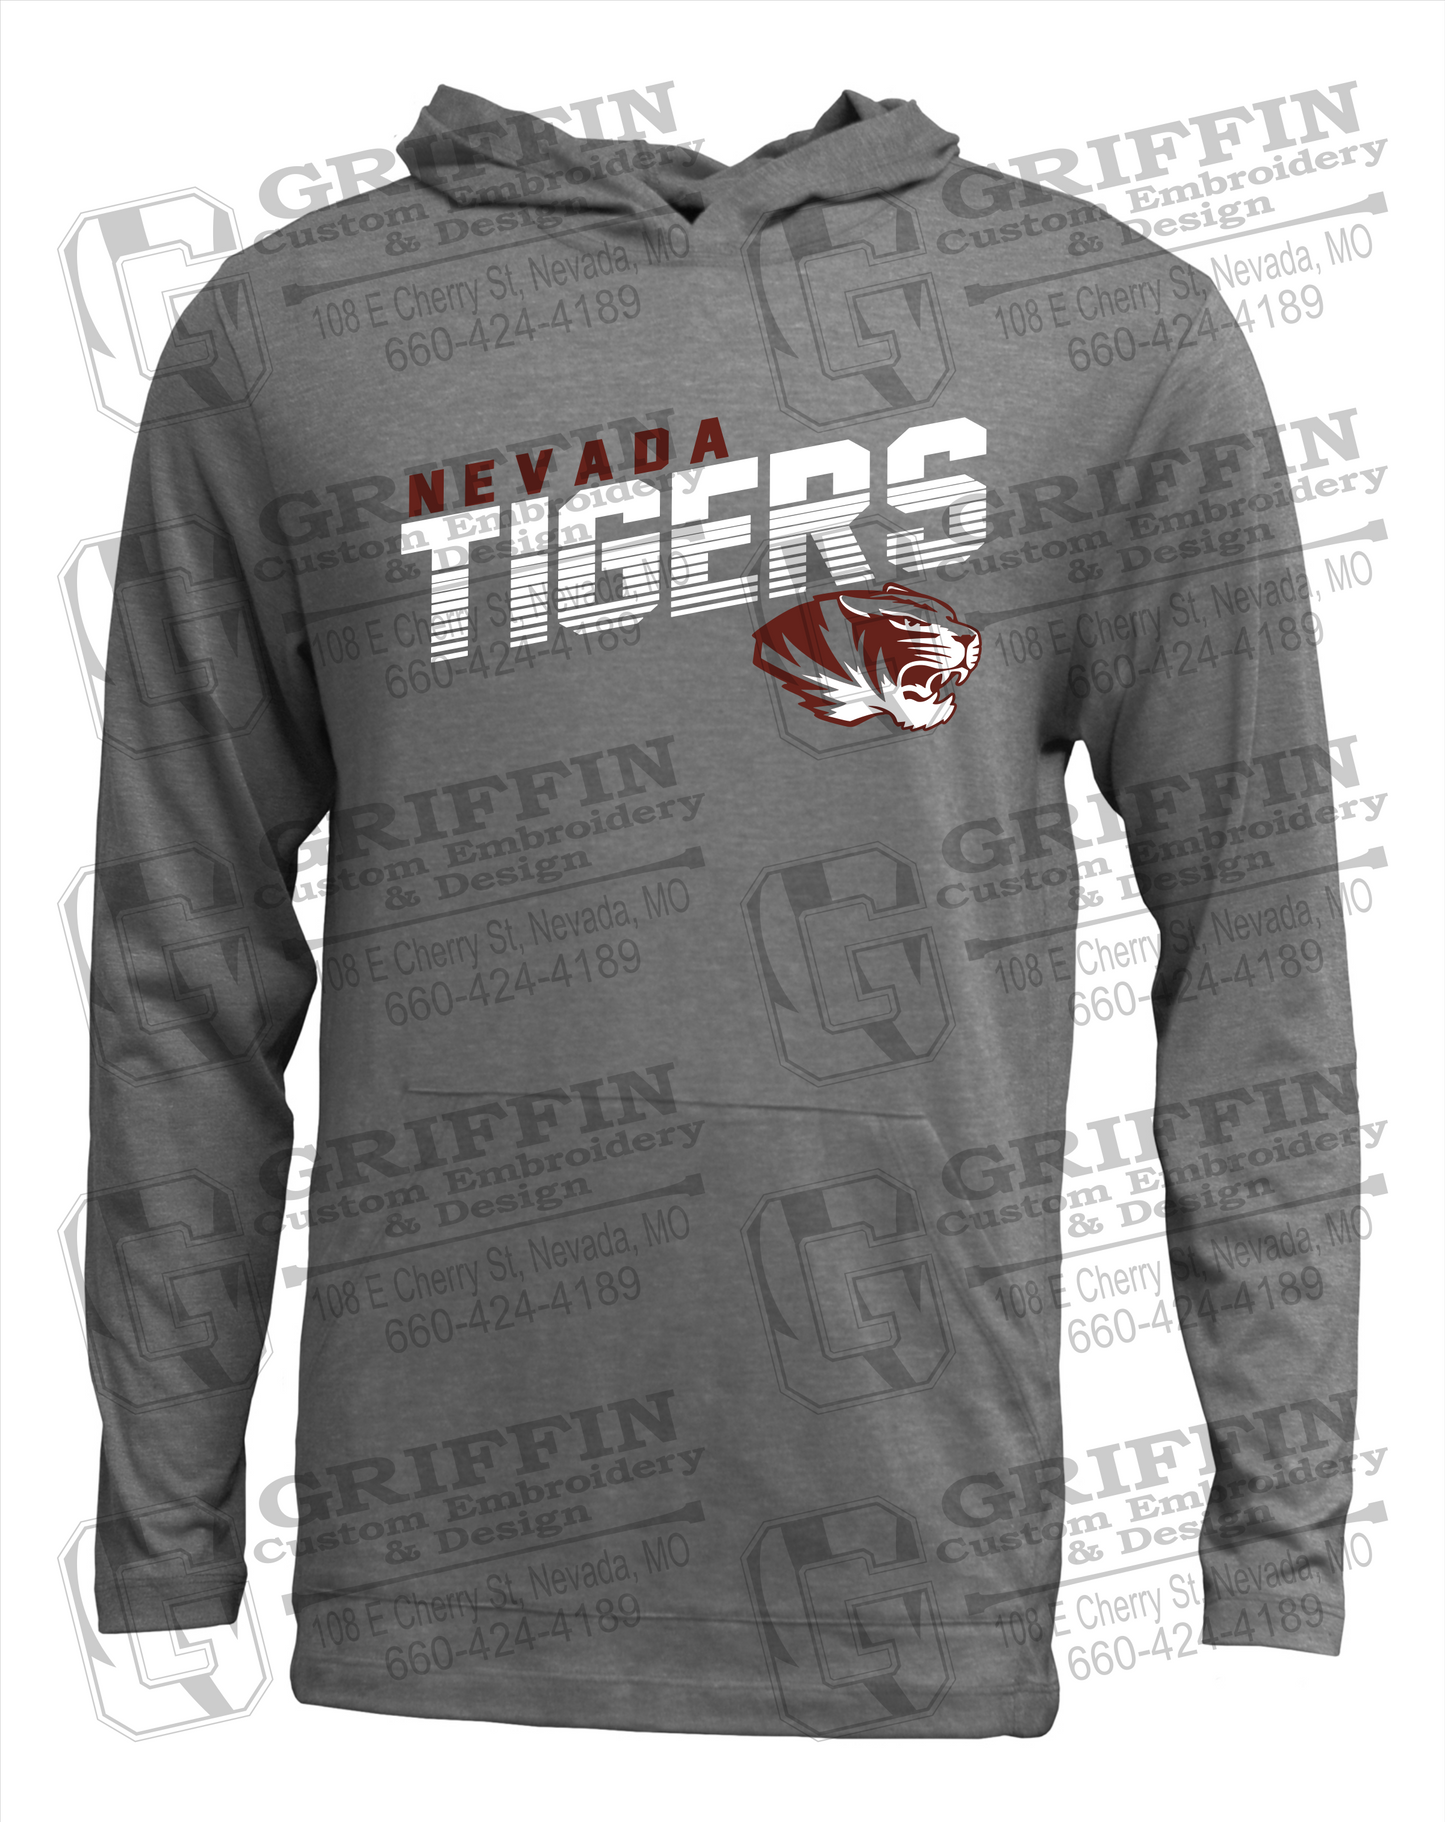 Nevada Tigers 19-A T-Shirt Hoodie